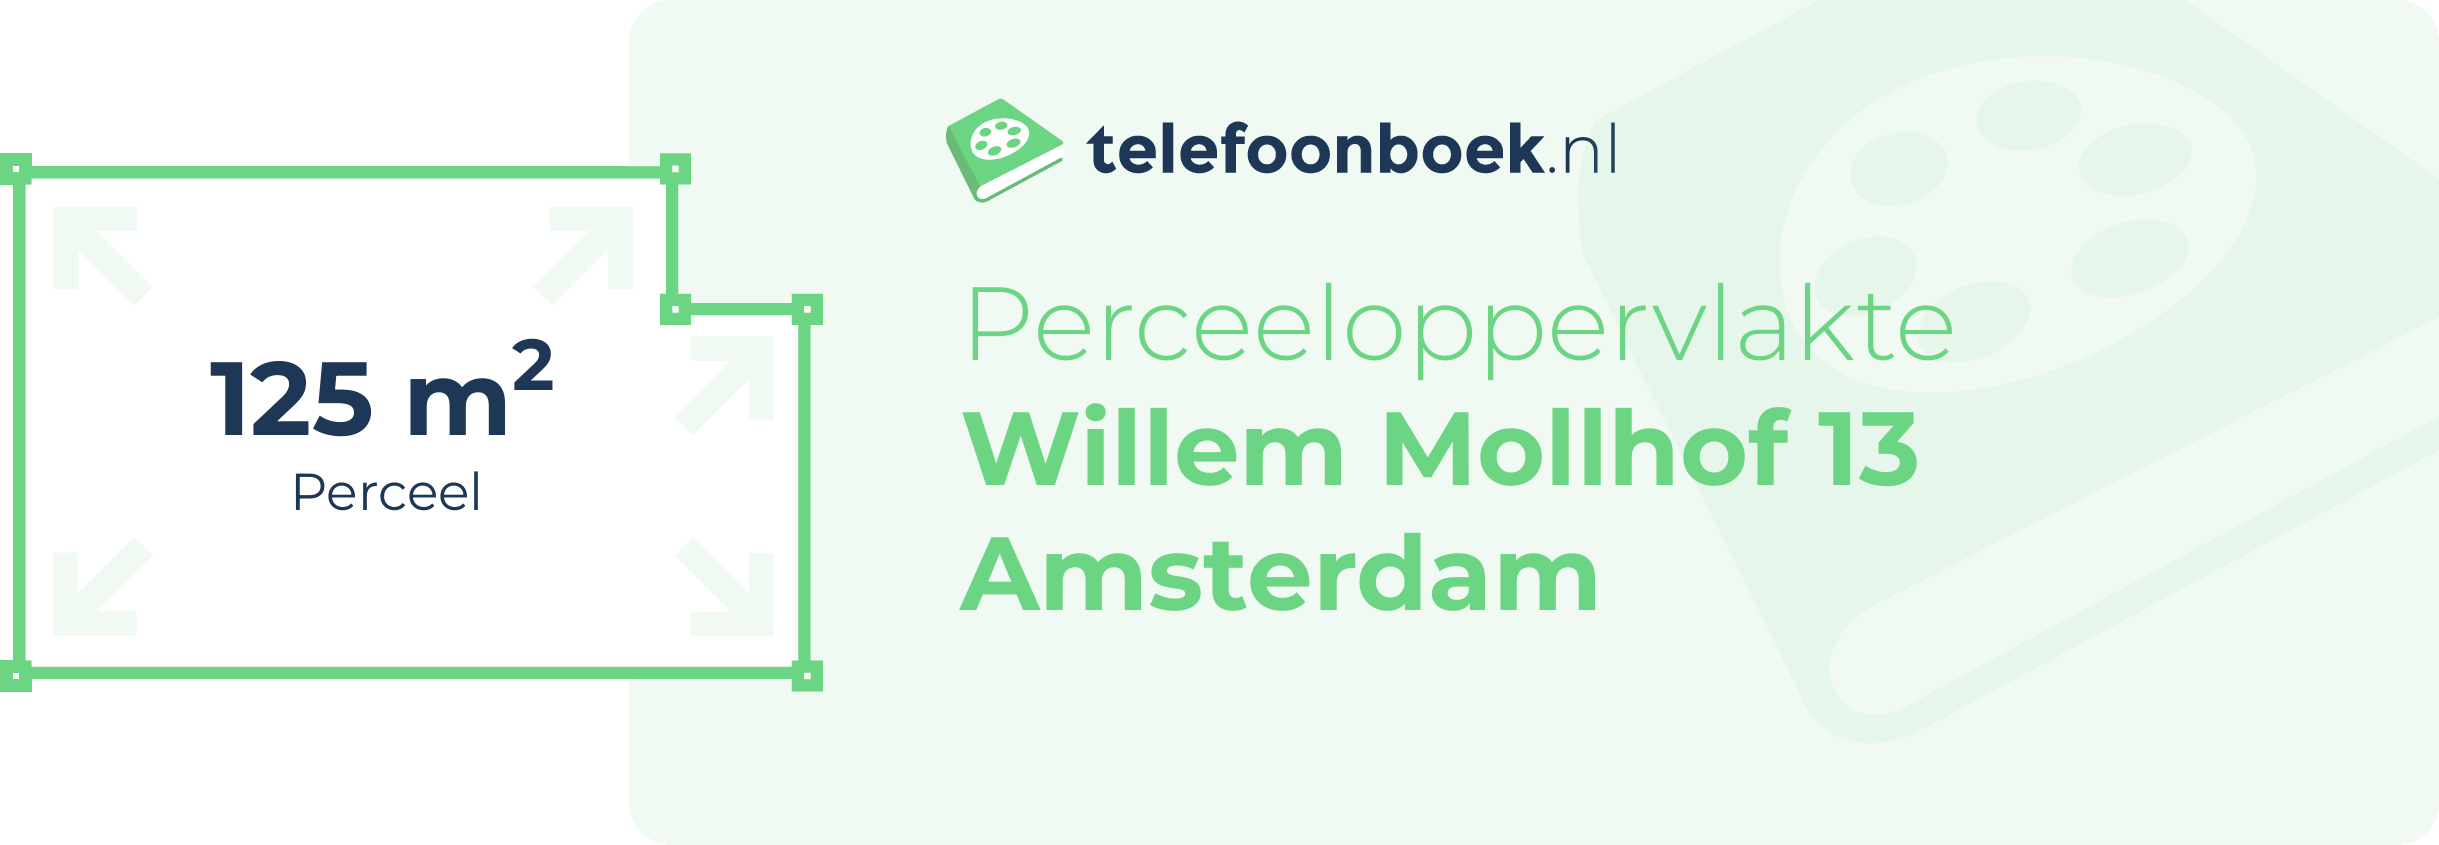 Perceeloppervlakte Willem Mollhof 13 Amsterdam